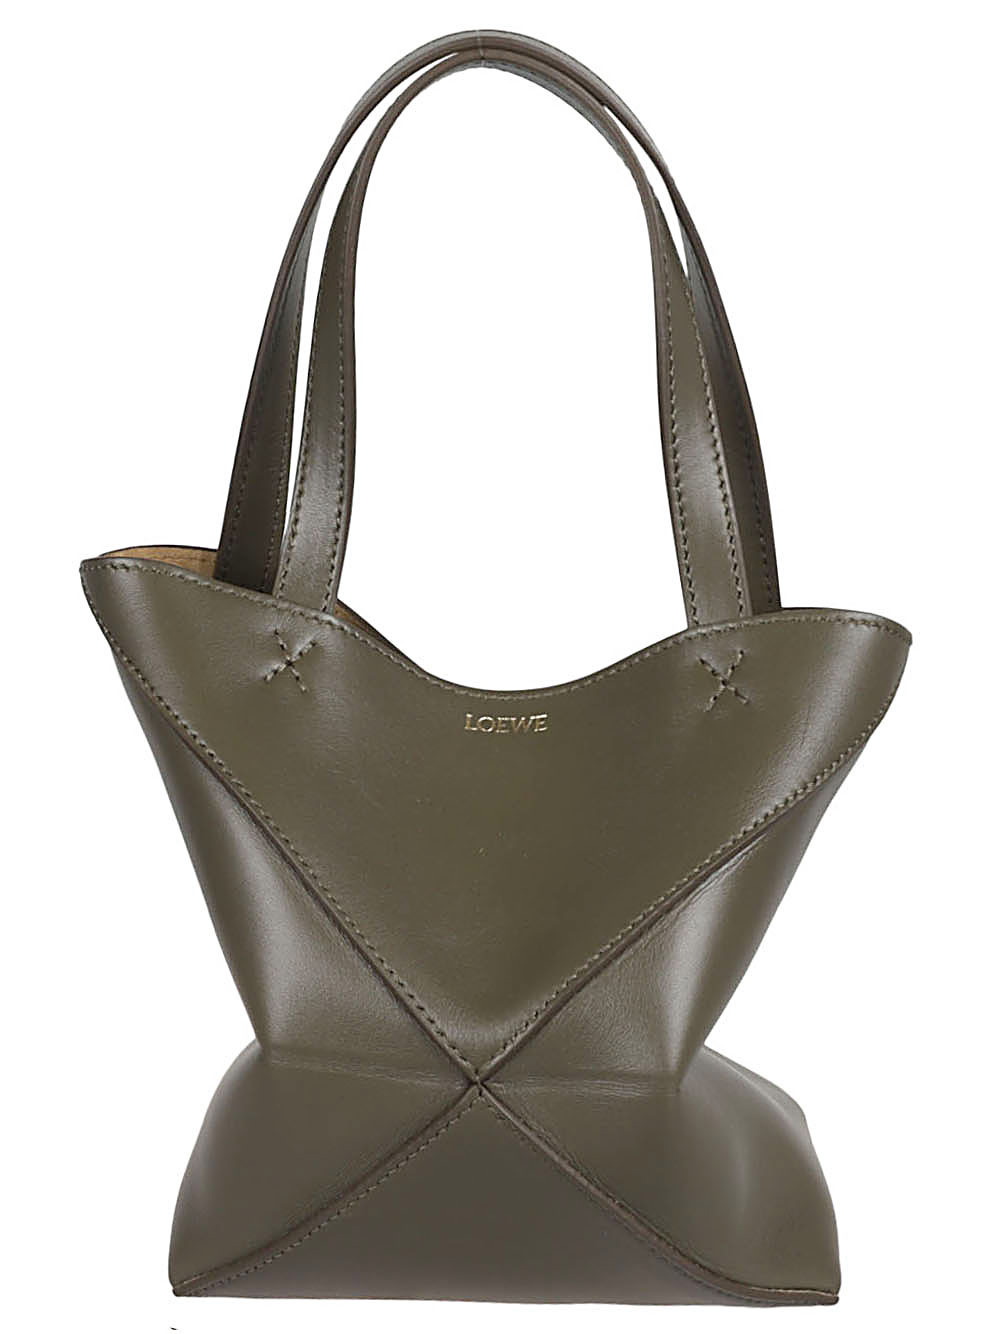 Loewe - Authenticated Gate Bucket Handbag - Leather Black Plain for Women, Never Worn